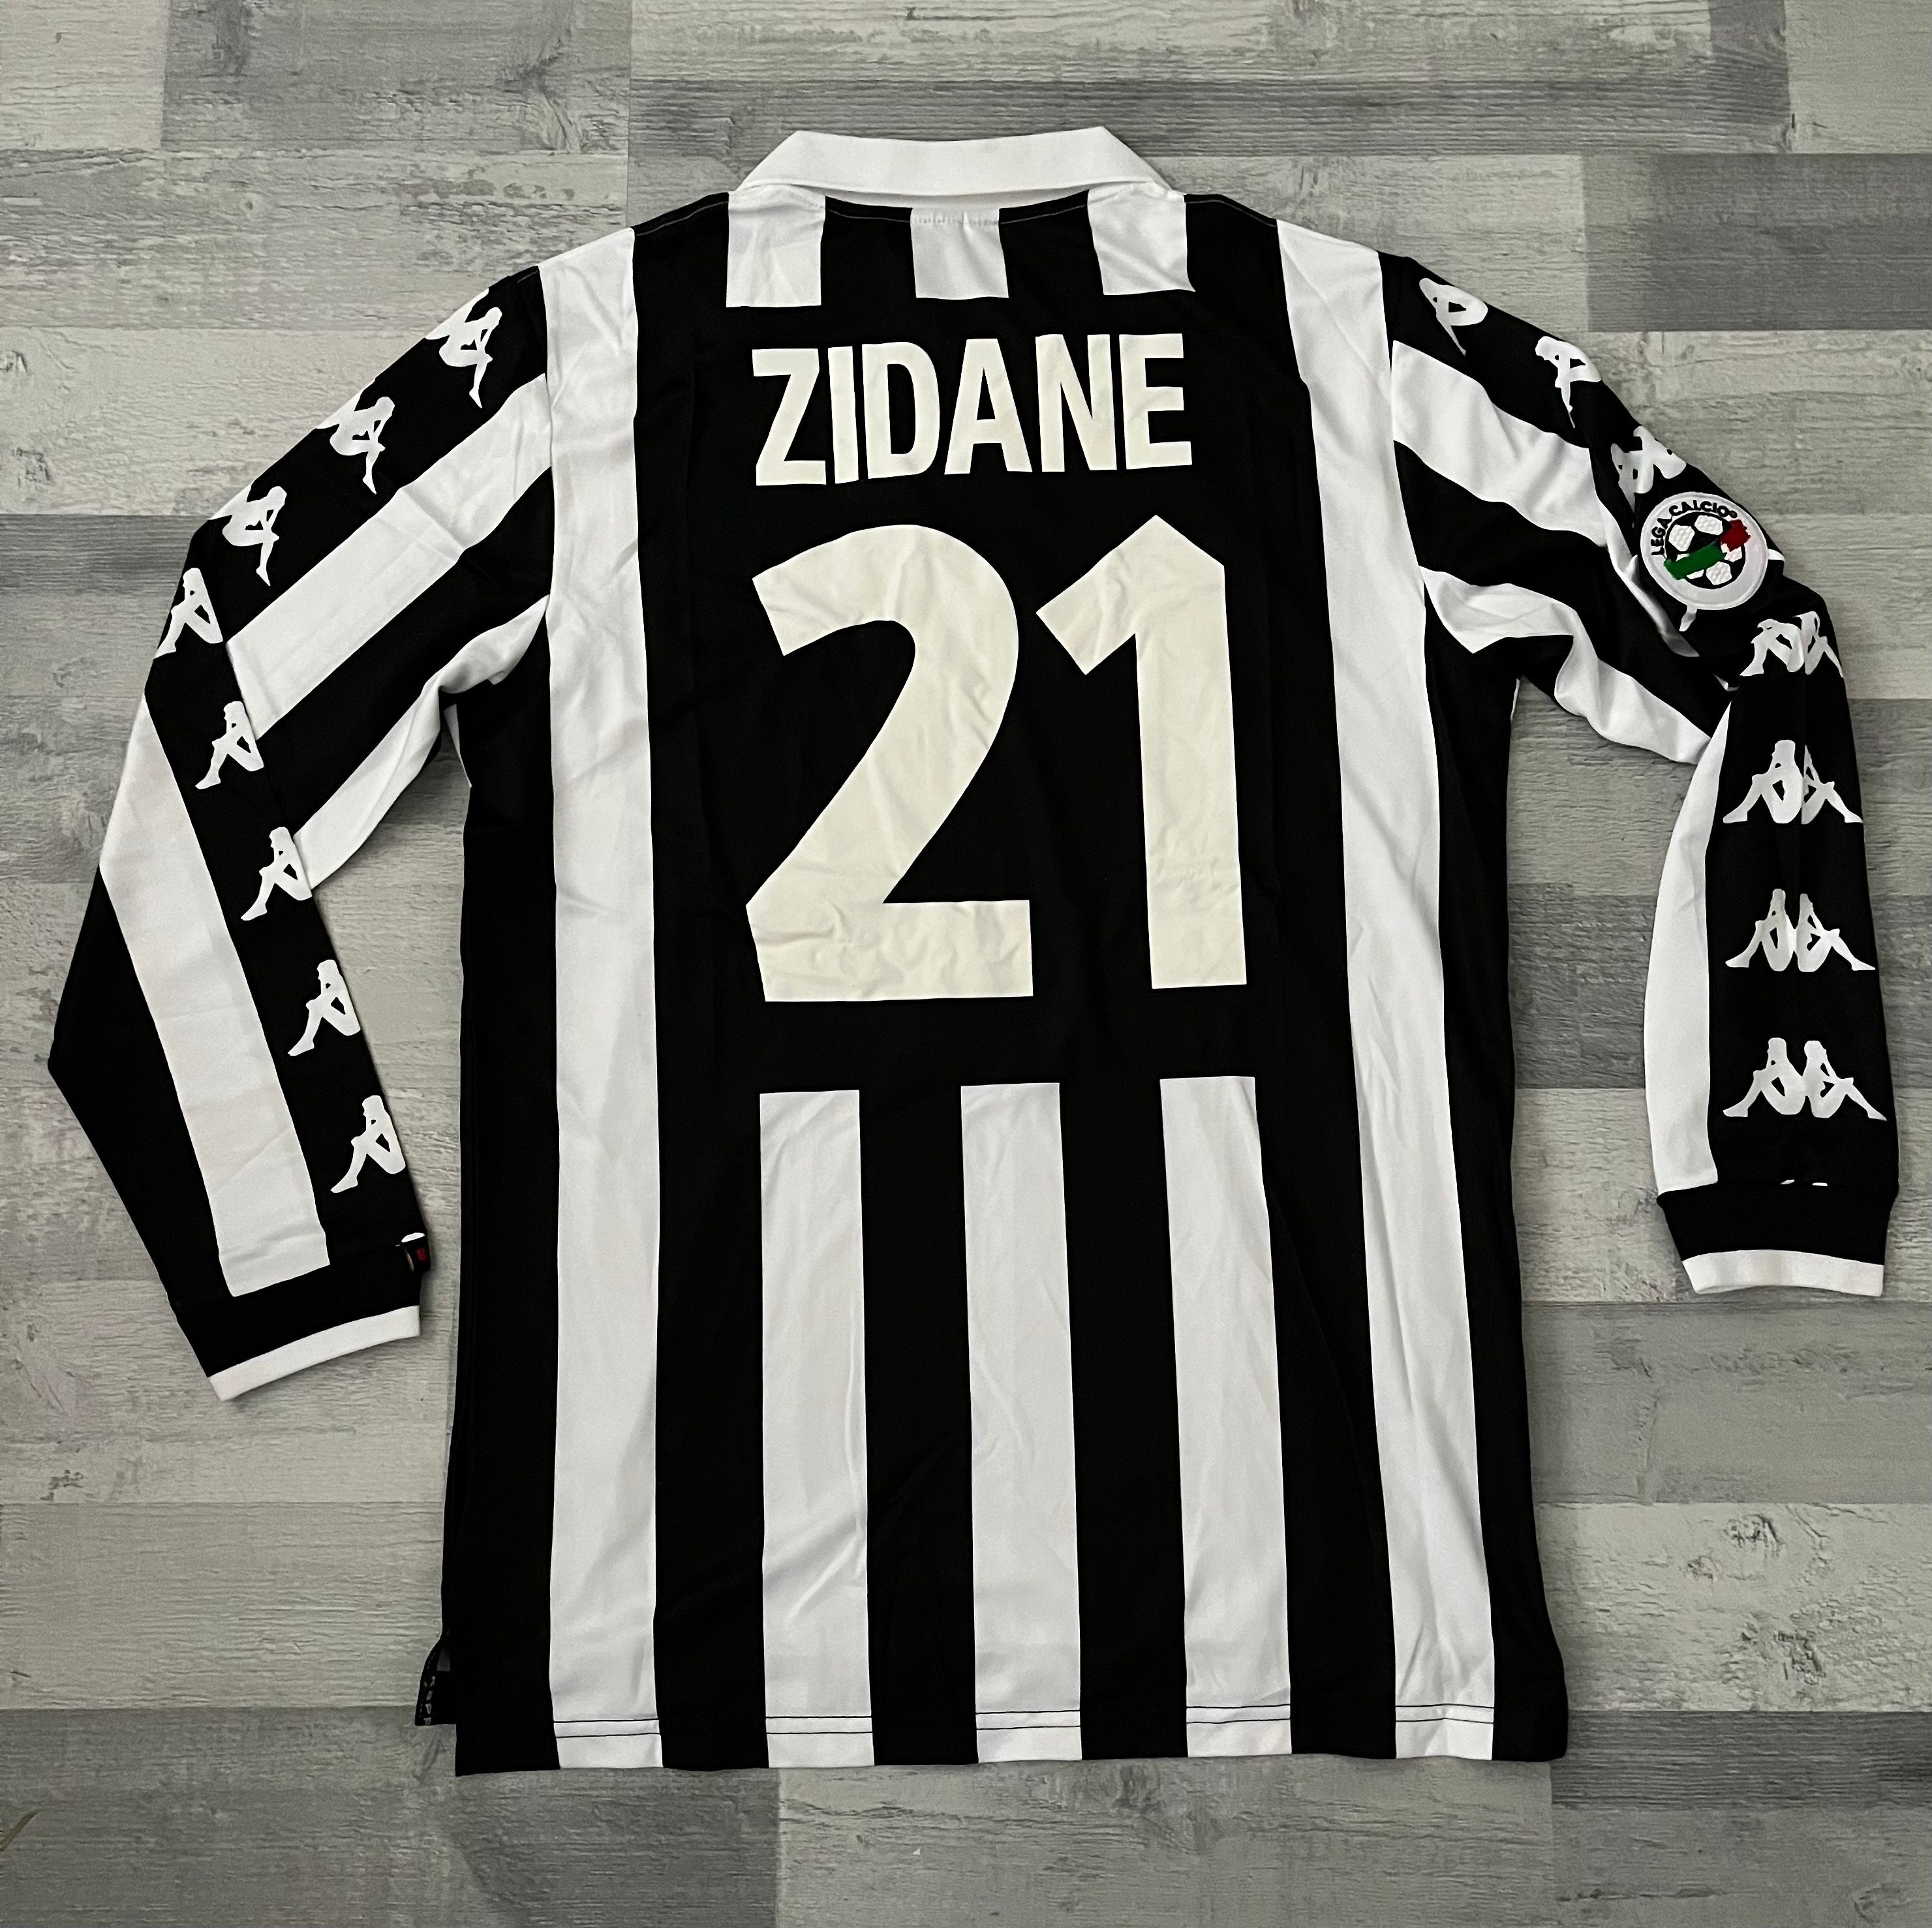 Retro France 2006 Home Jersey Zinedine Zidane 10 – Daze Sports